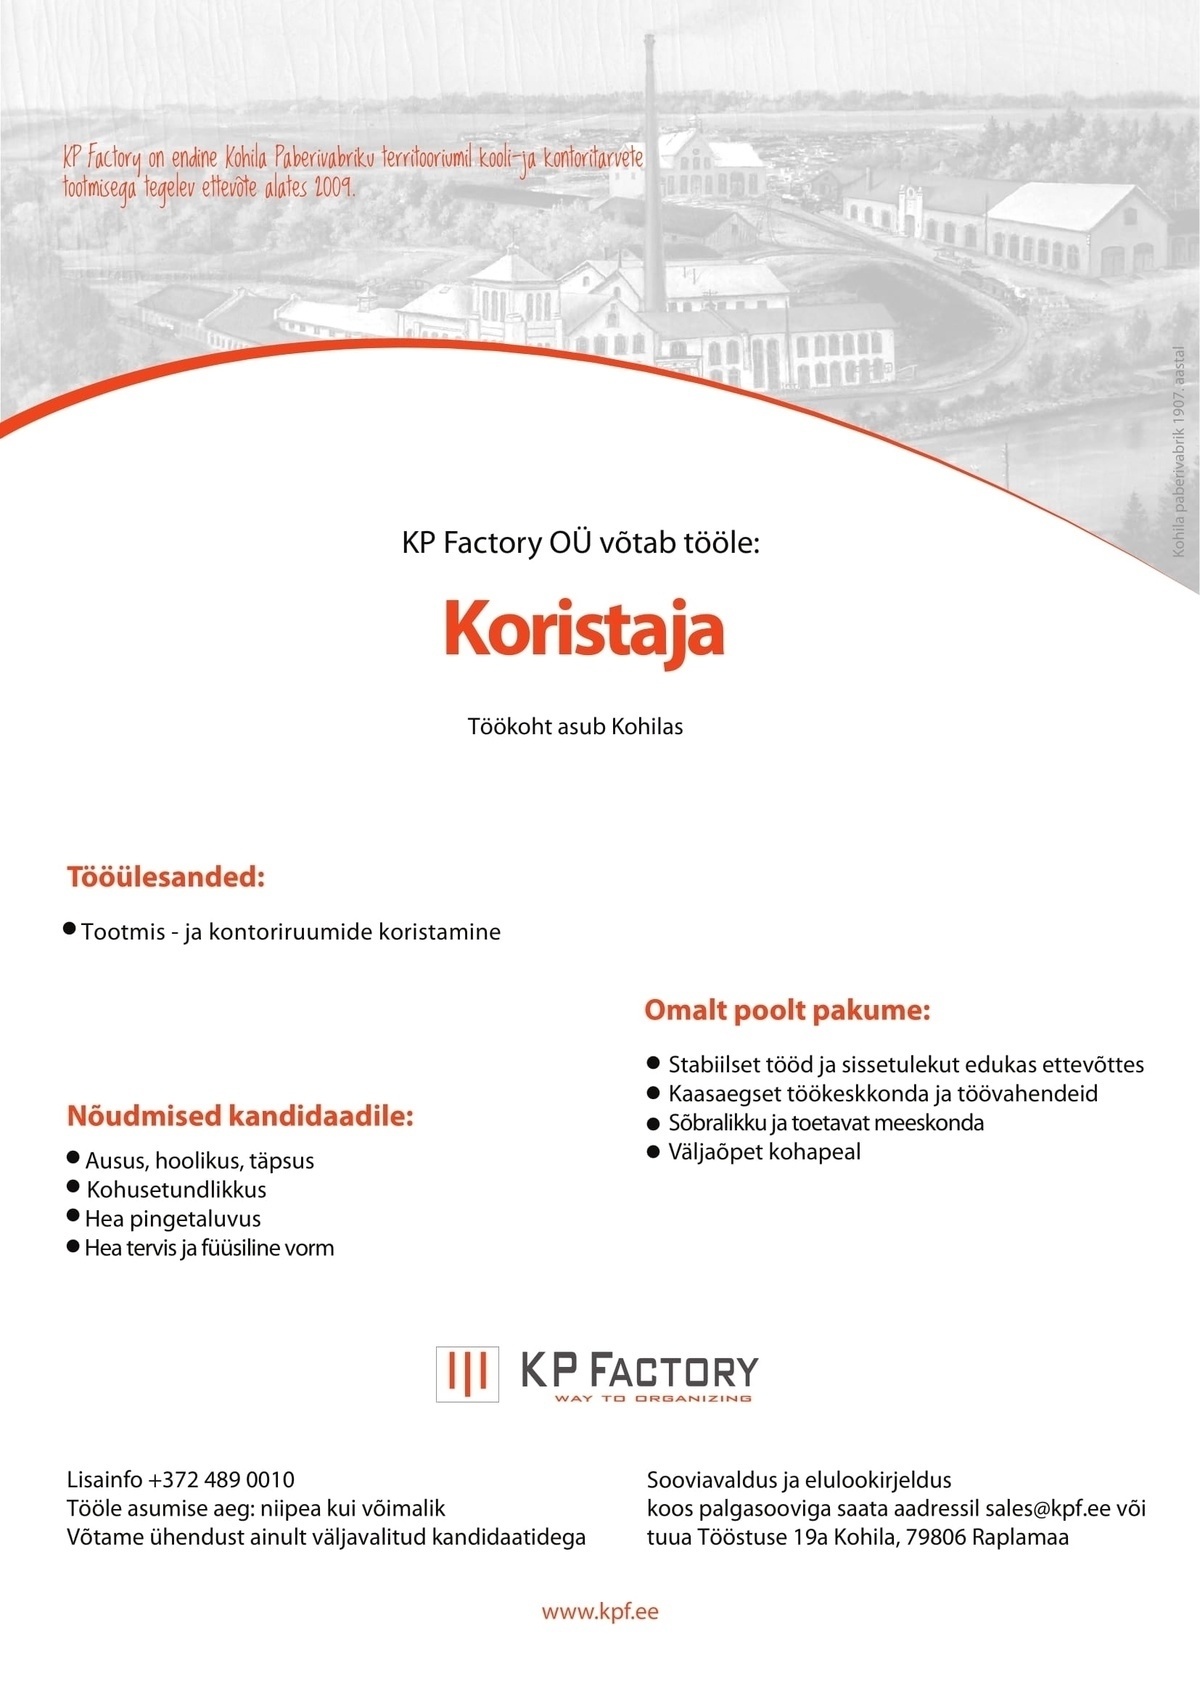 KP Factory OÜ Koristaja